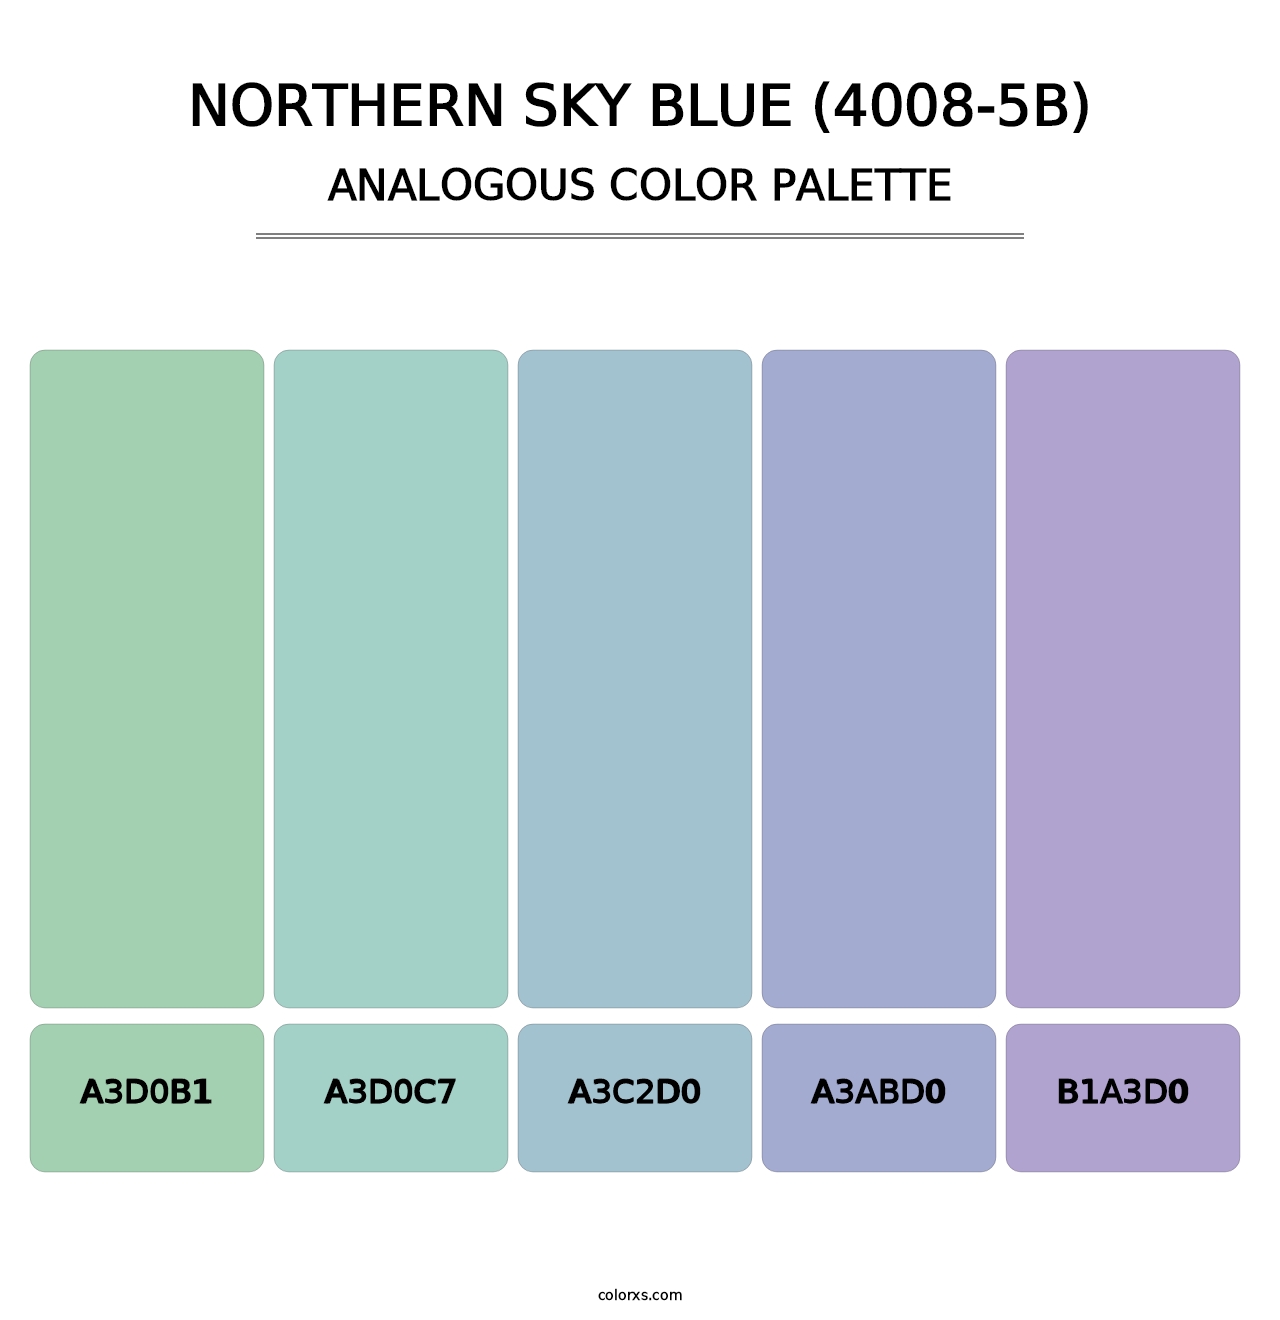 Northern Sky Blue (4008-5B) - Analogous Color Palette